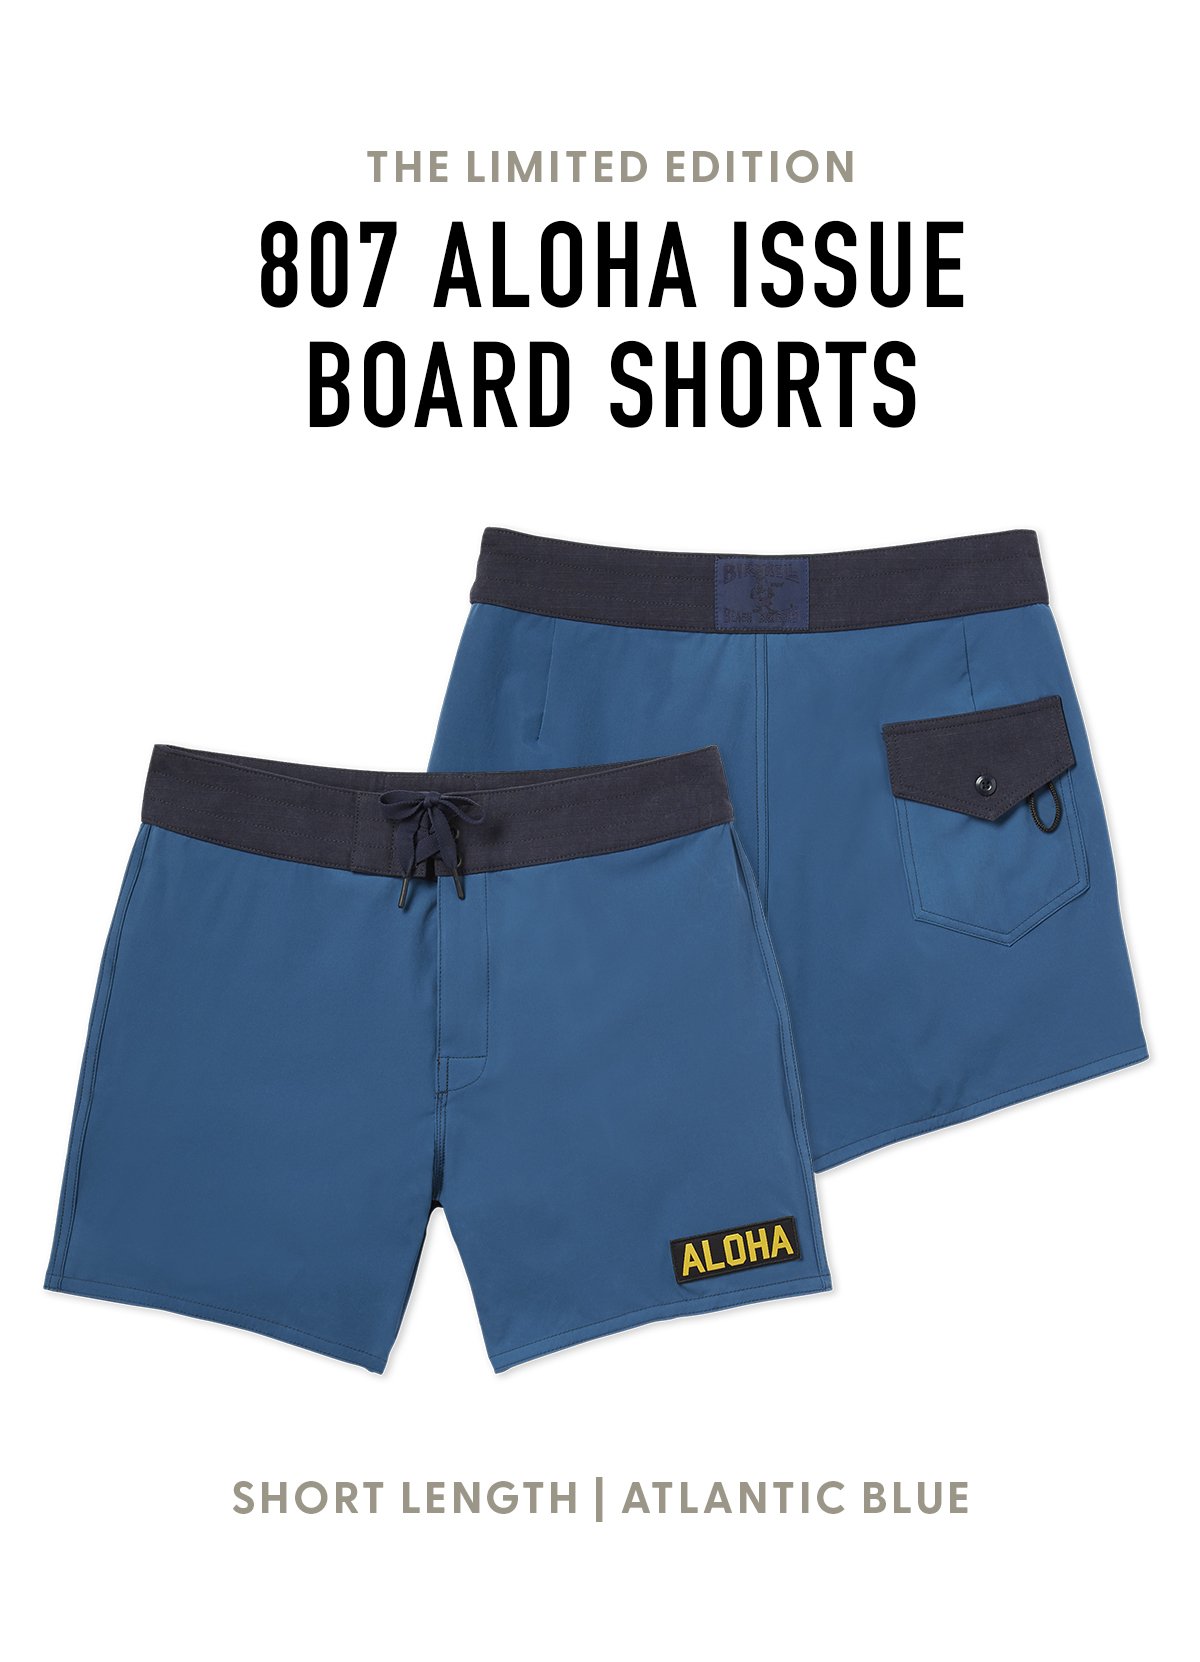 The Limited Edition 807 Aloha Issue Board Shorts | Short Length | Atlantic Blue